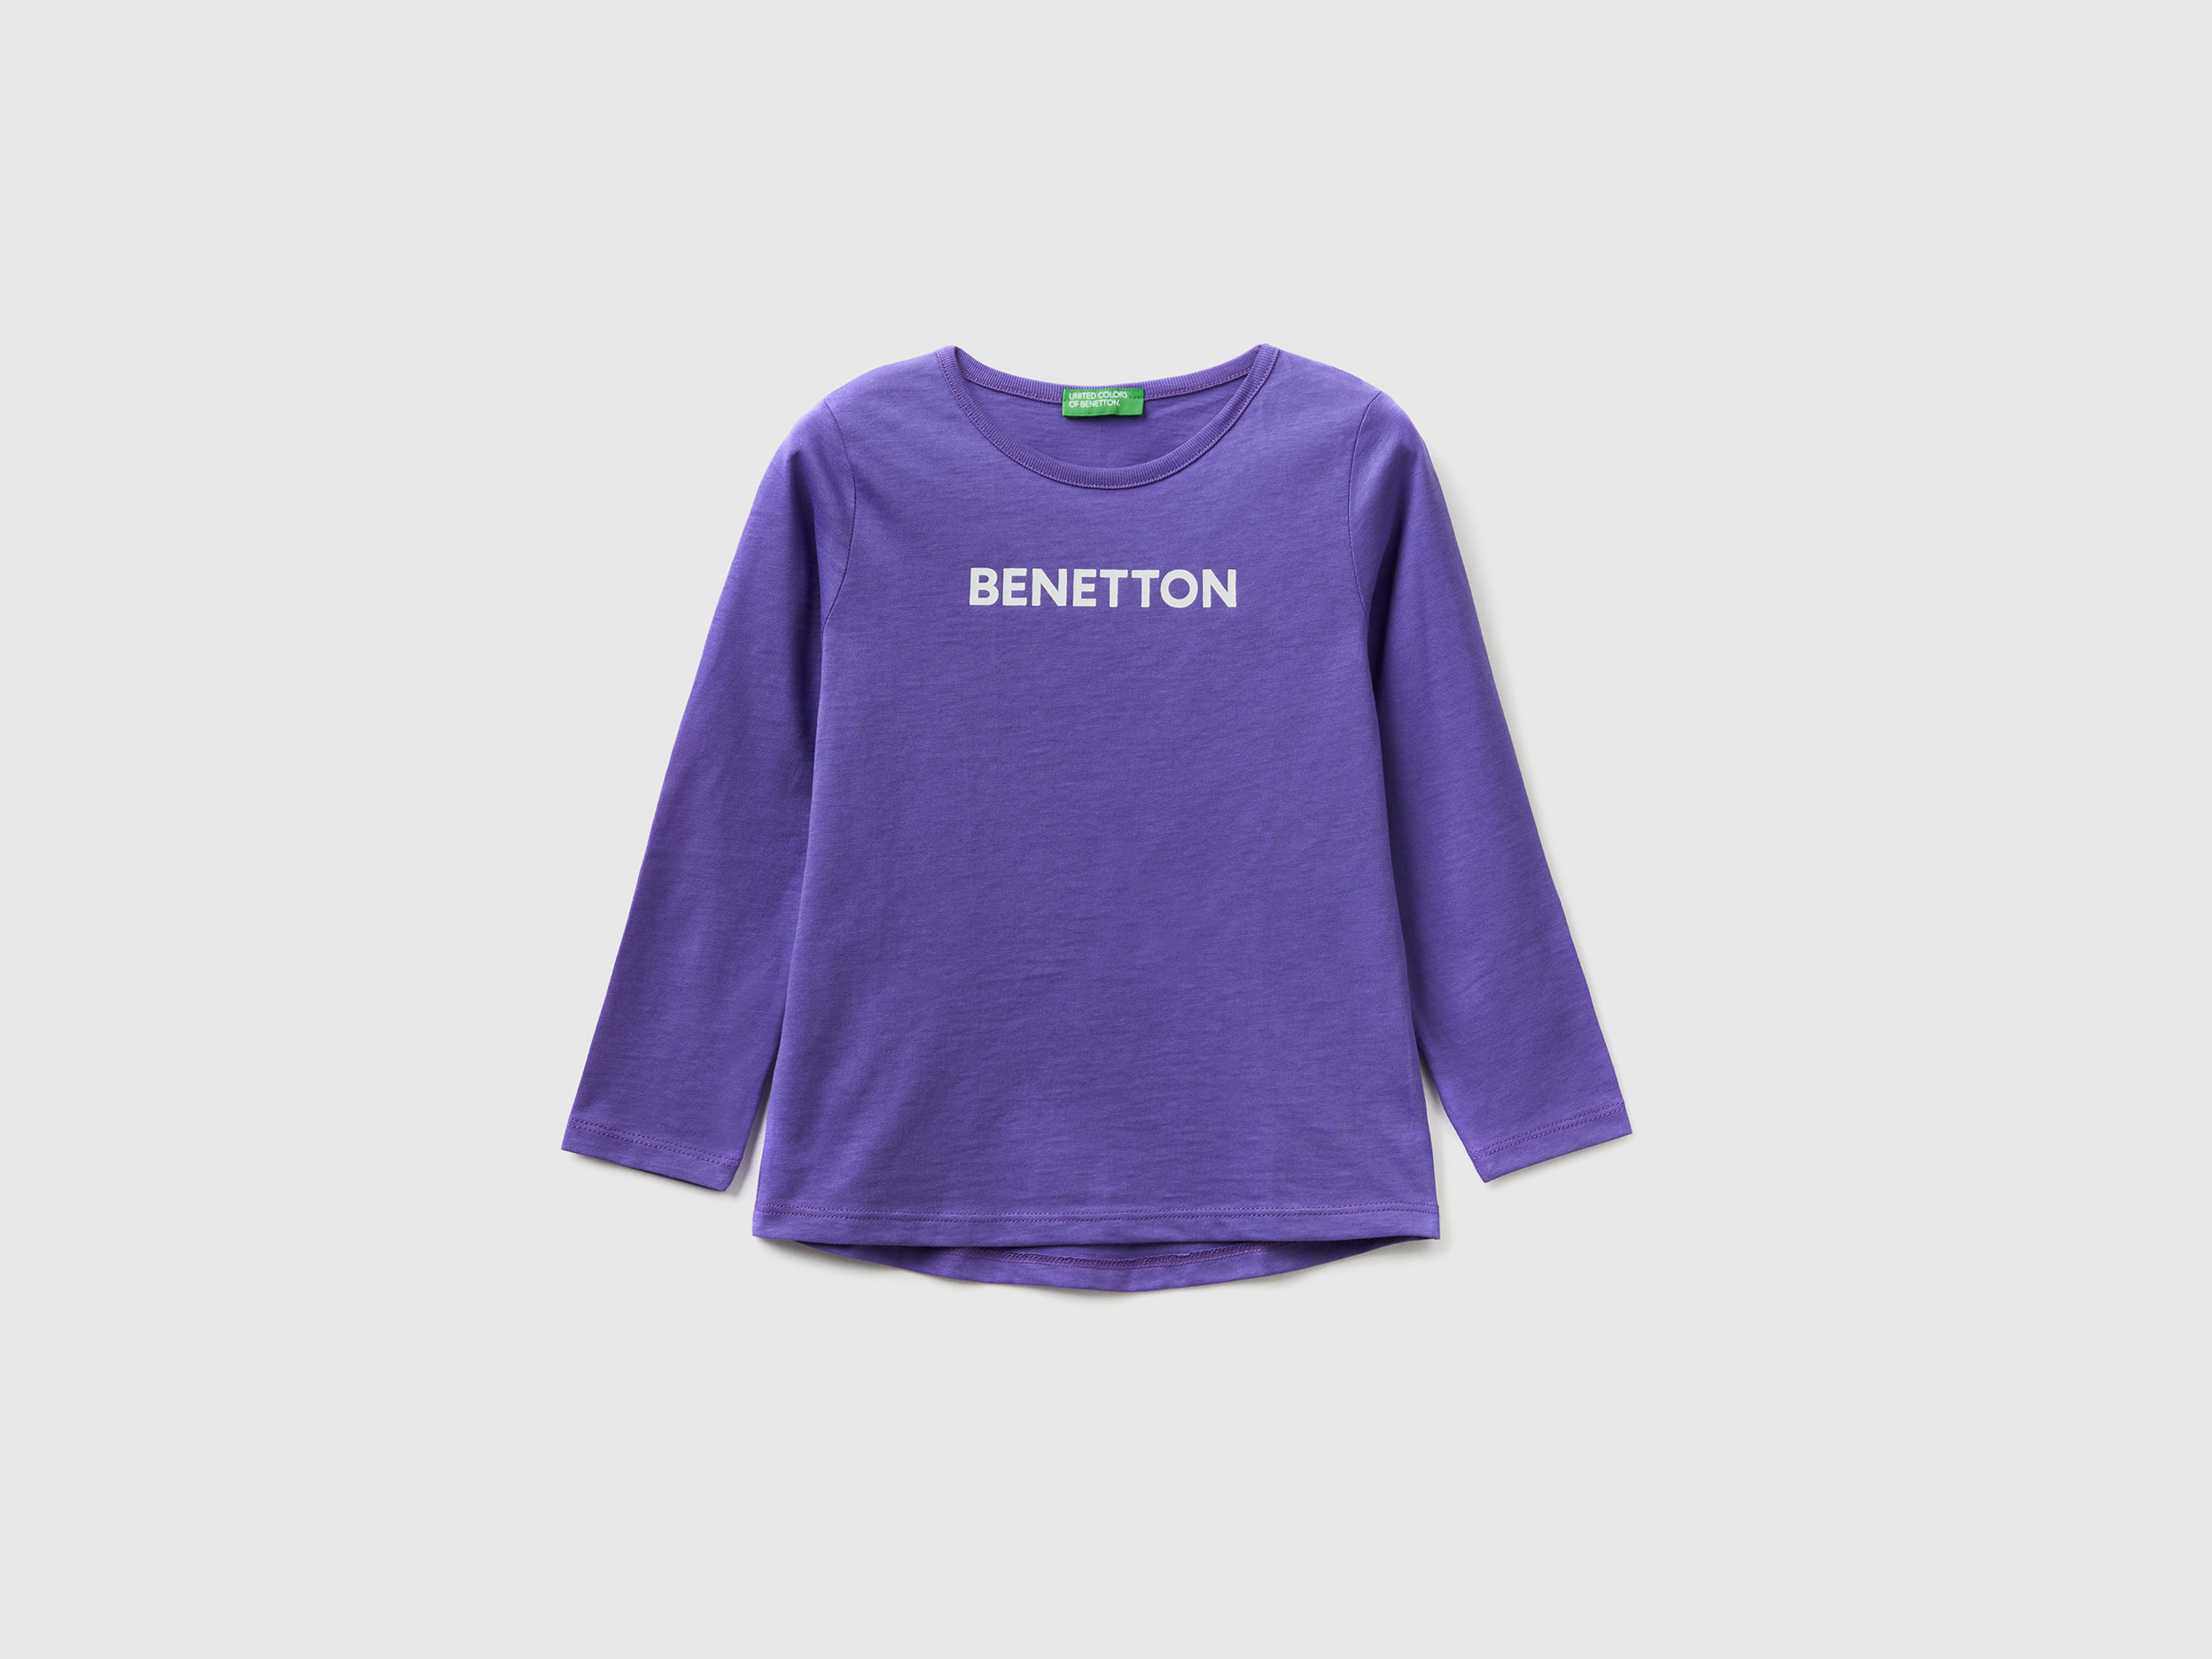 Benetton, 100% Cotton T-shirt With Logo, size 5-6, Violet, Kids